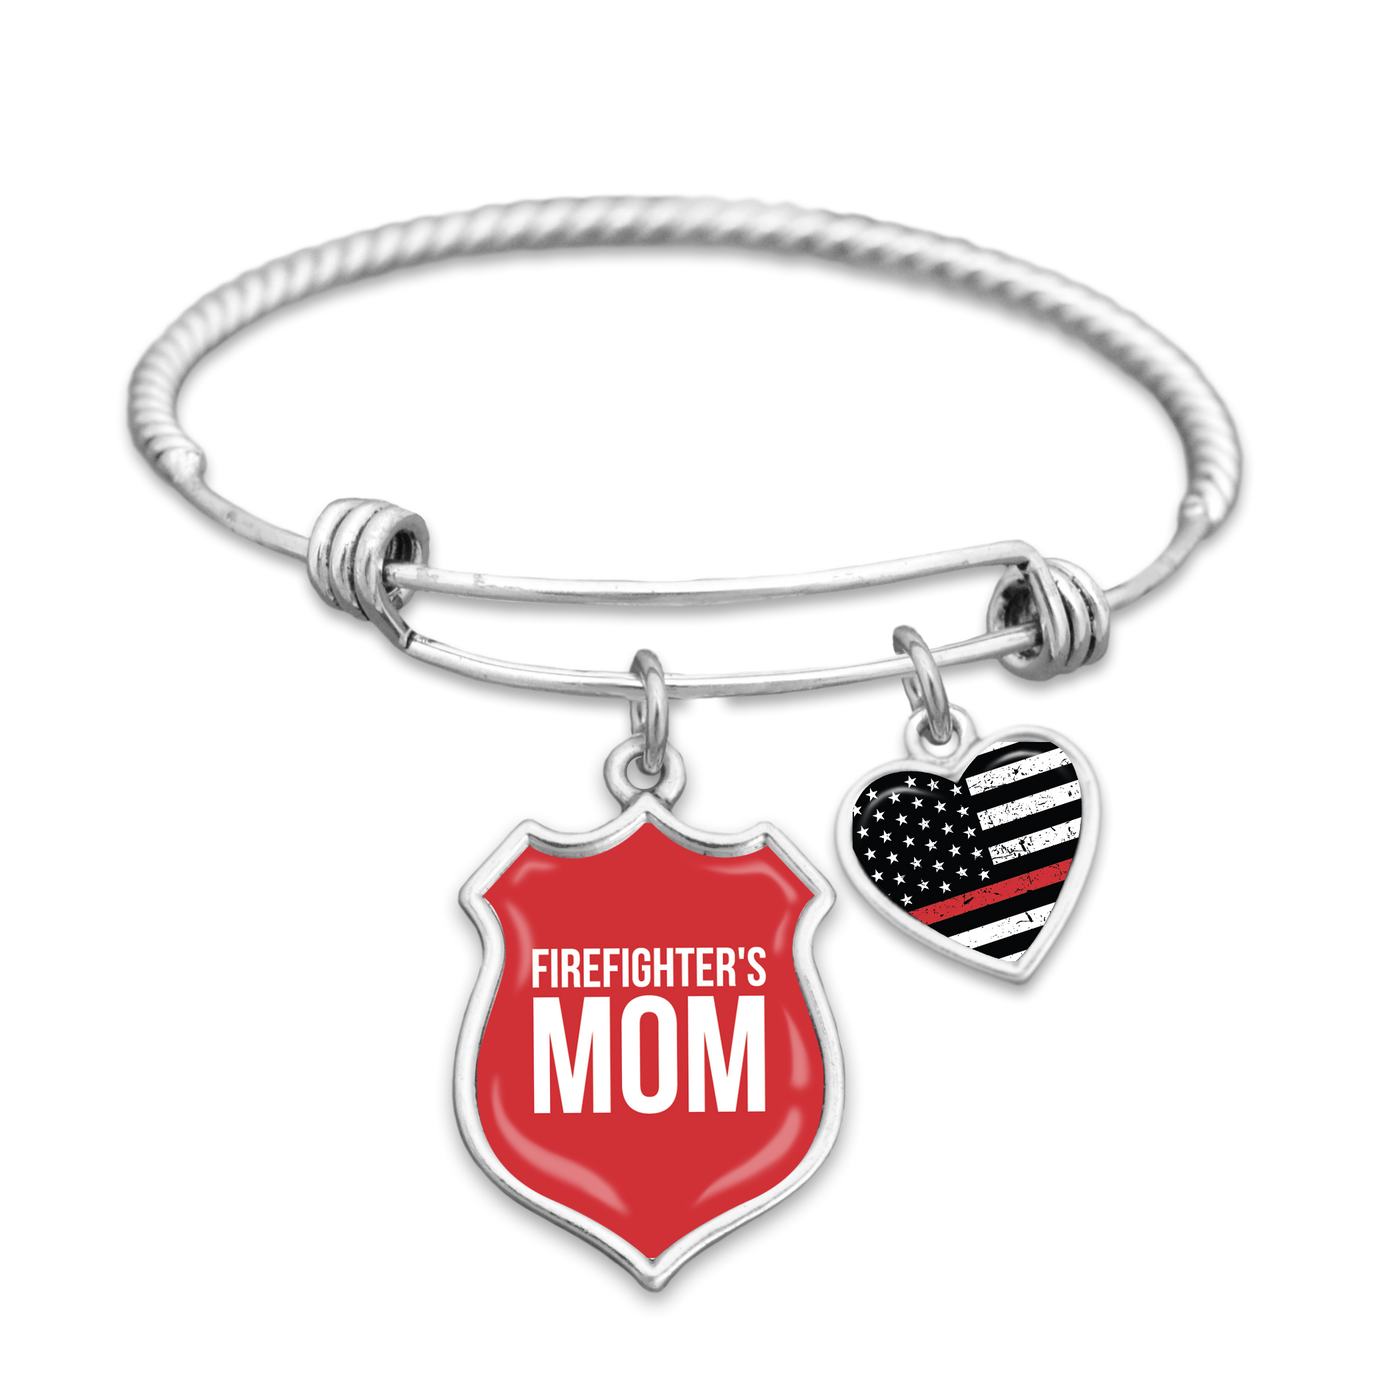 Firefighter's Mom Thin Red Line Charm Bracelet